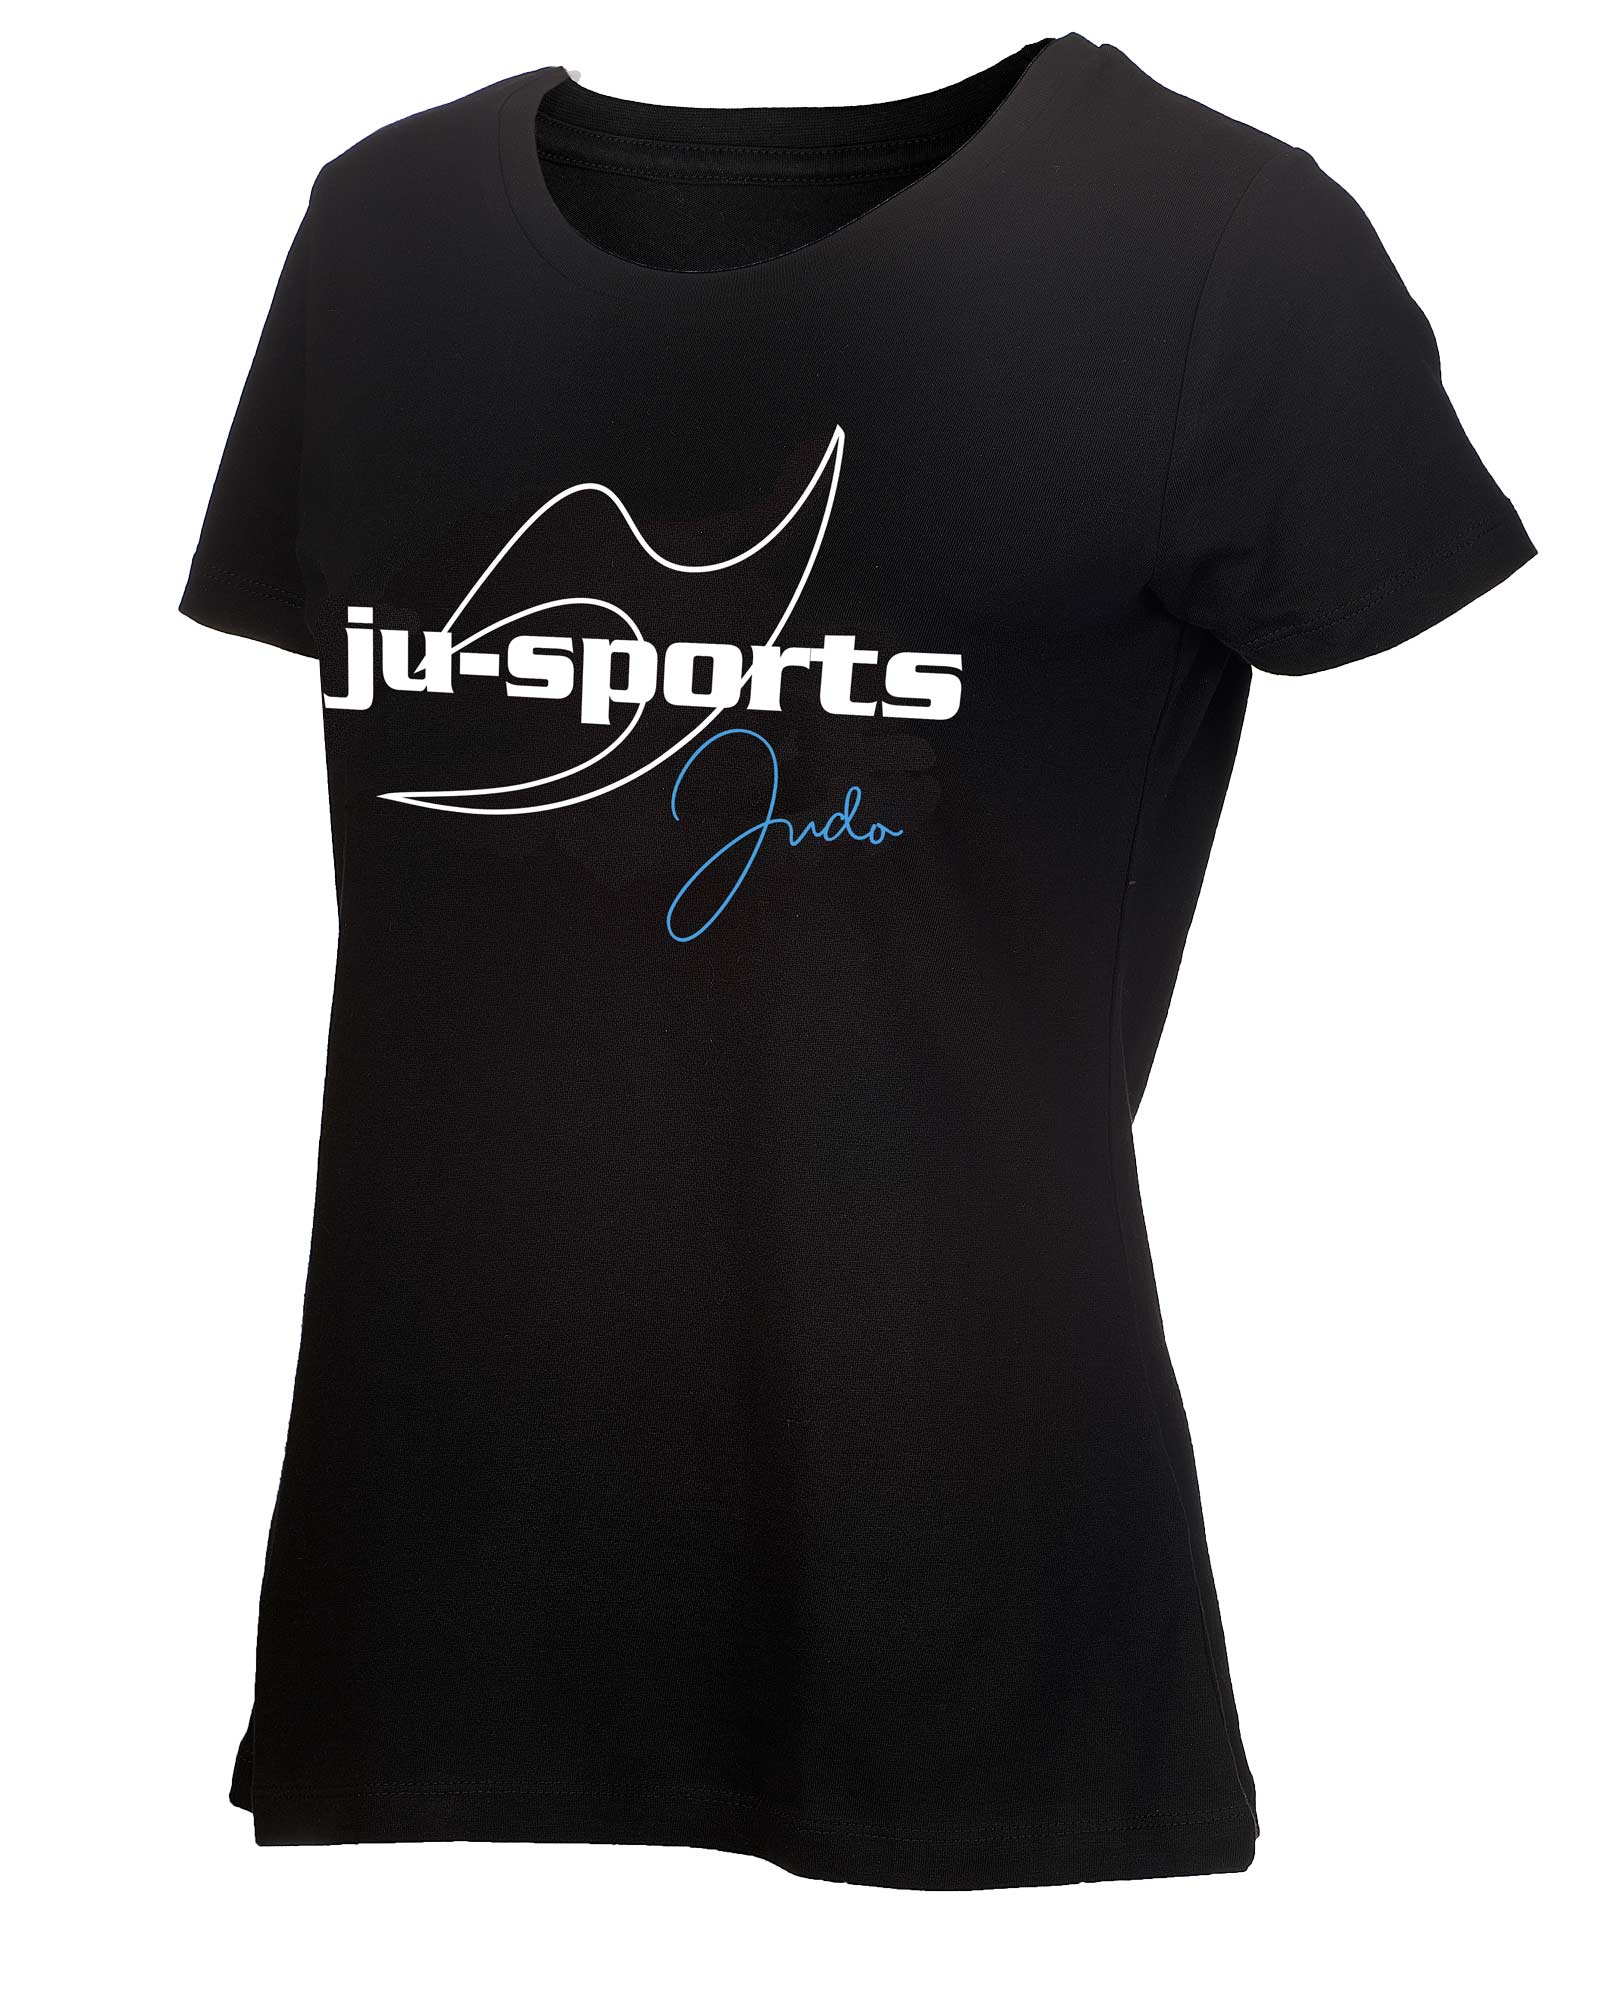 Ju-Sports Signature Line "Judo" T-Shirt ladycut